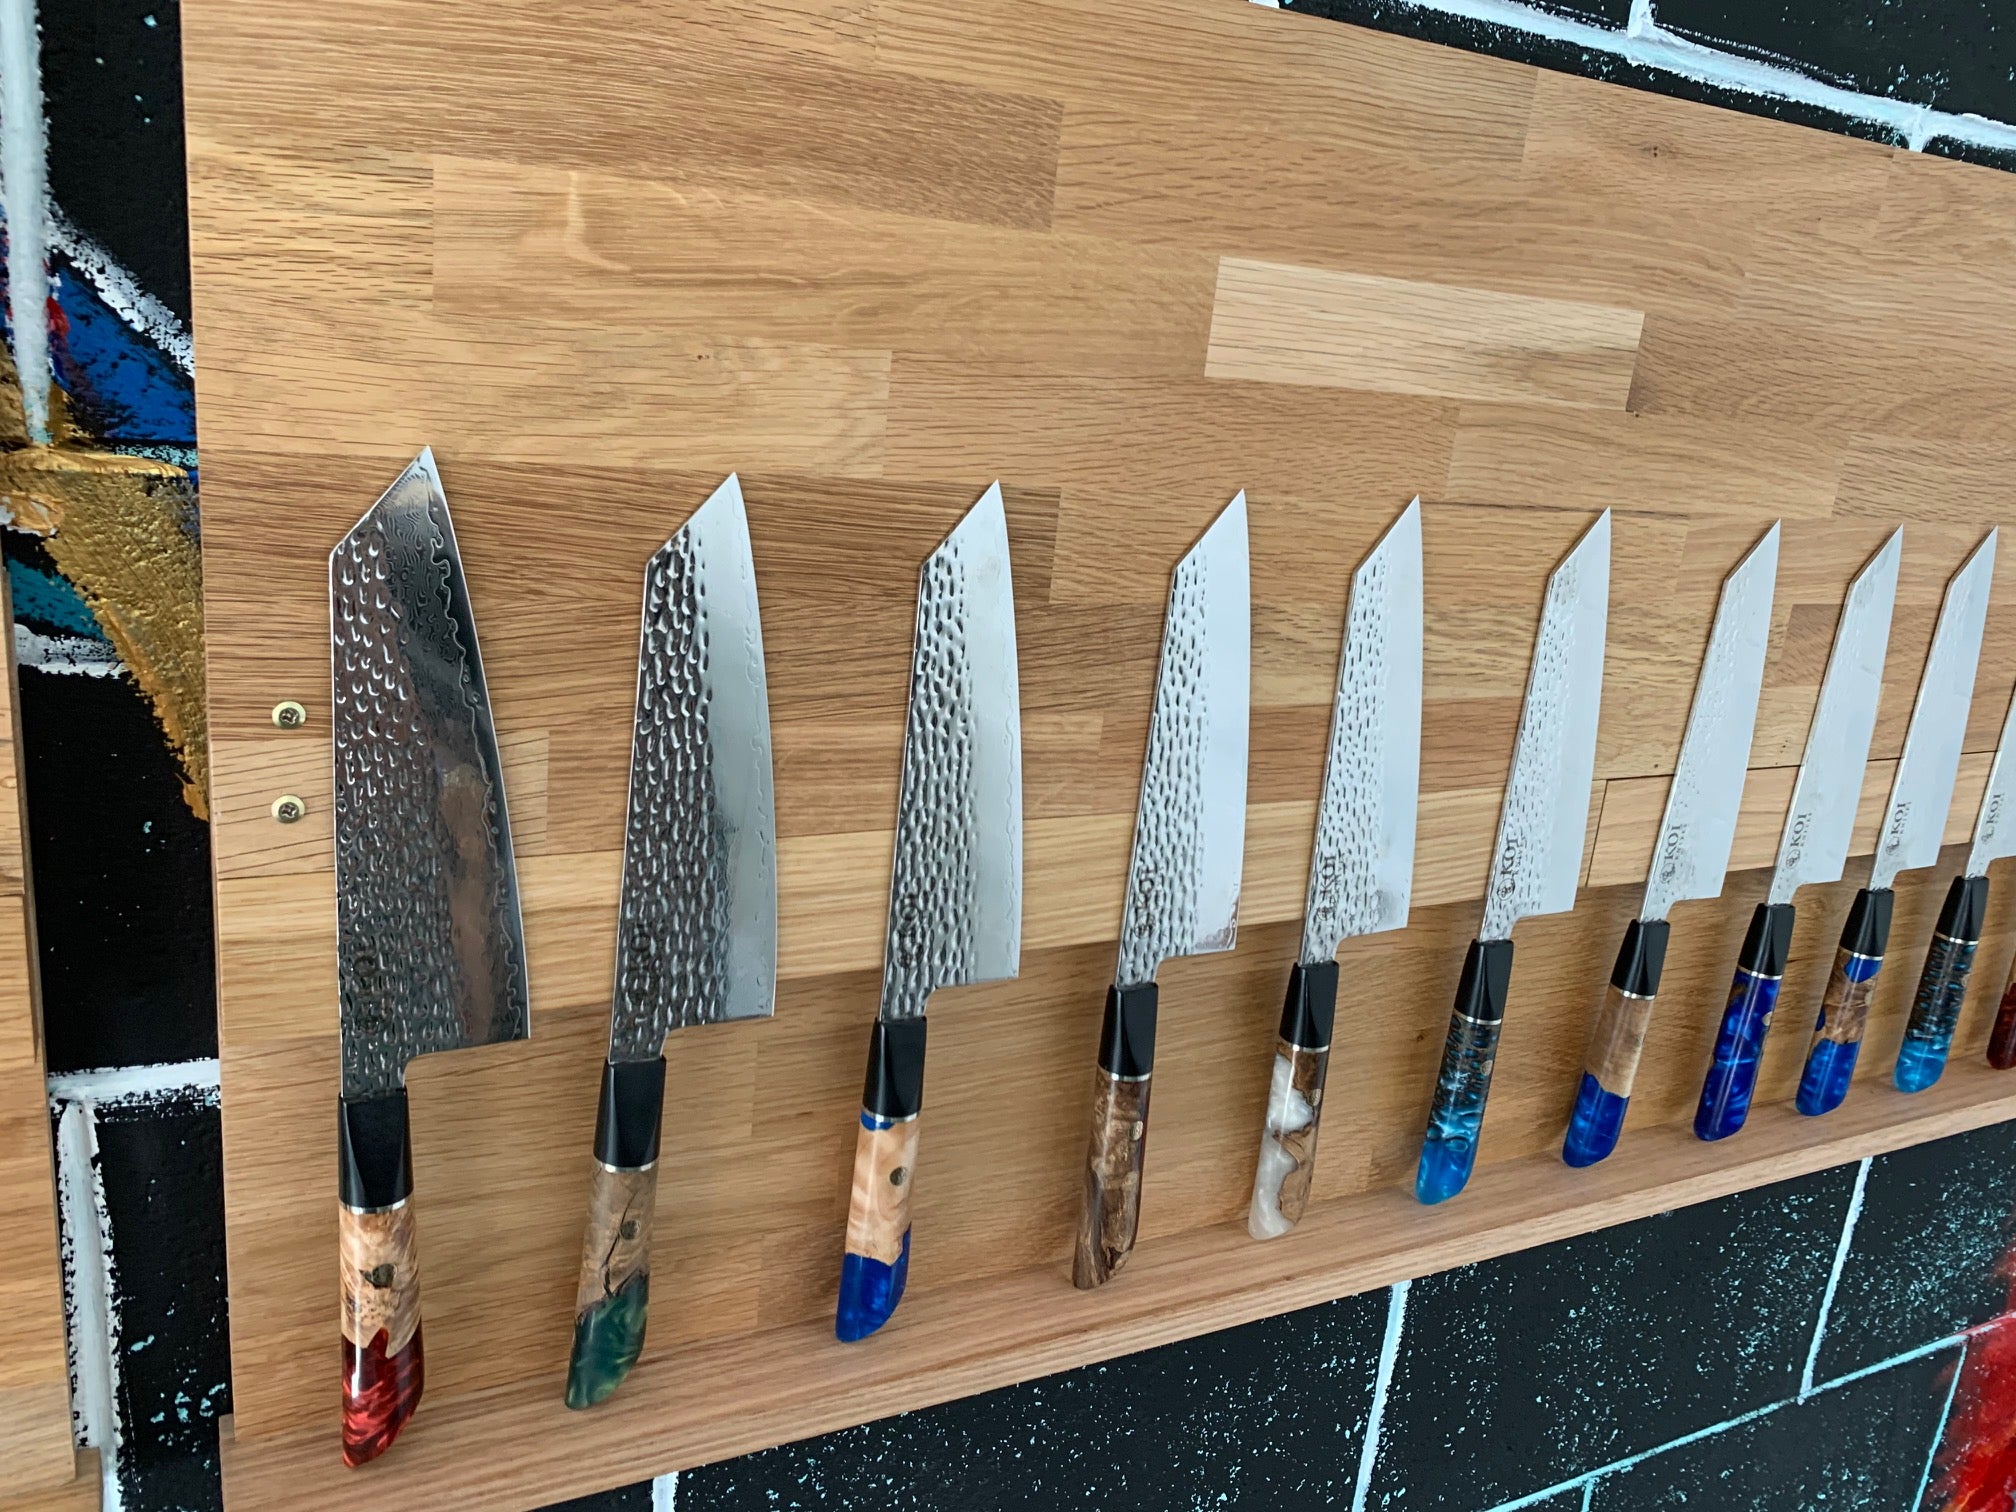 Custom Japanese Chef Knife Sets in Blocks, Stands or Racks